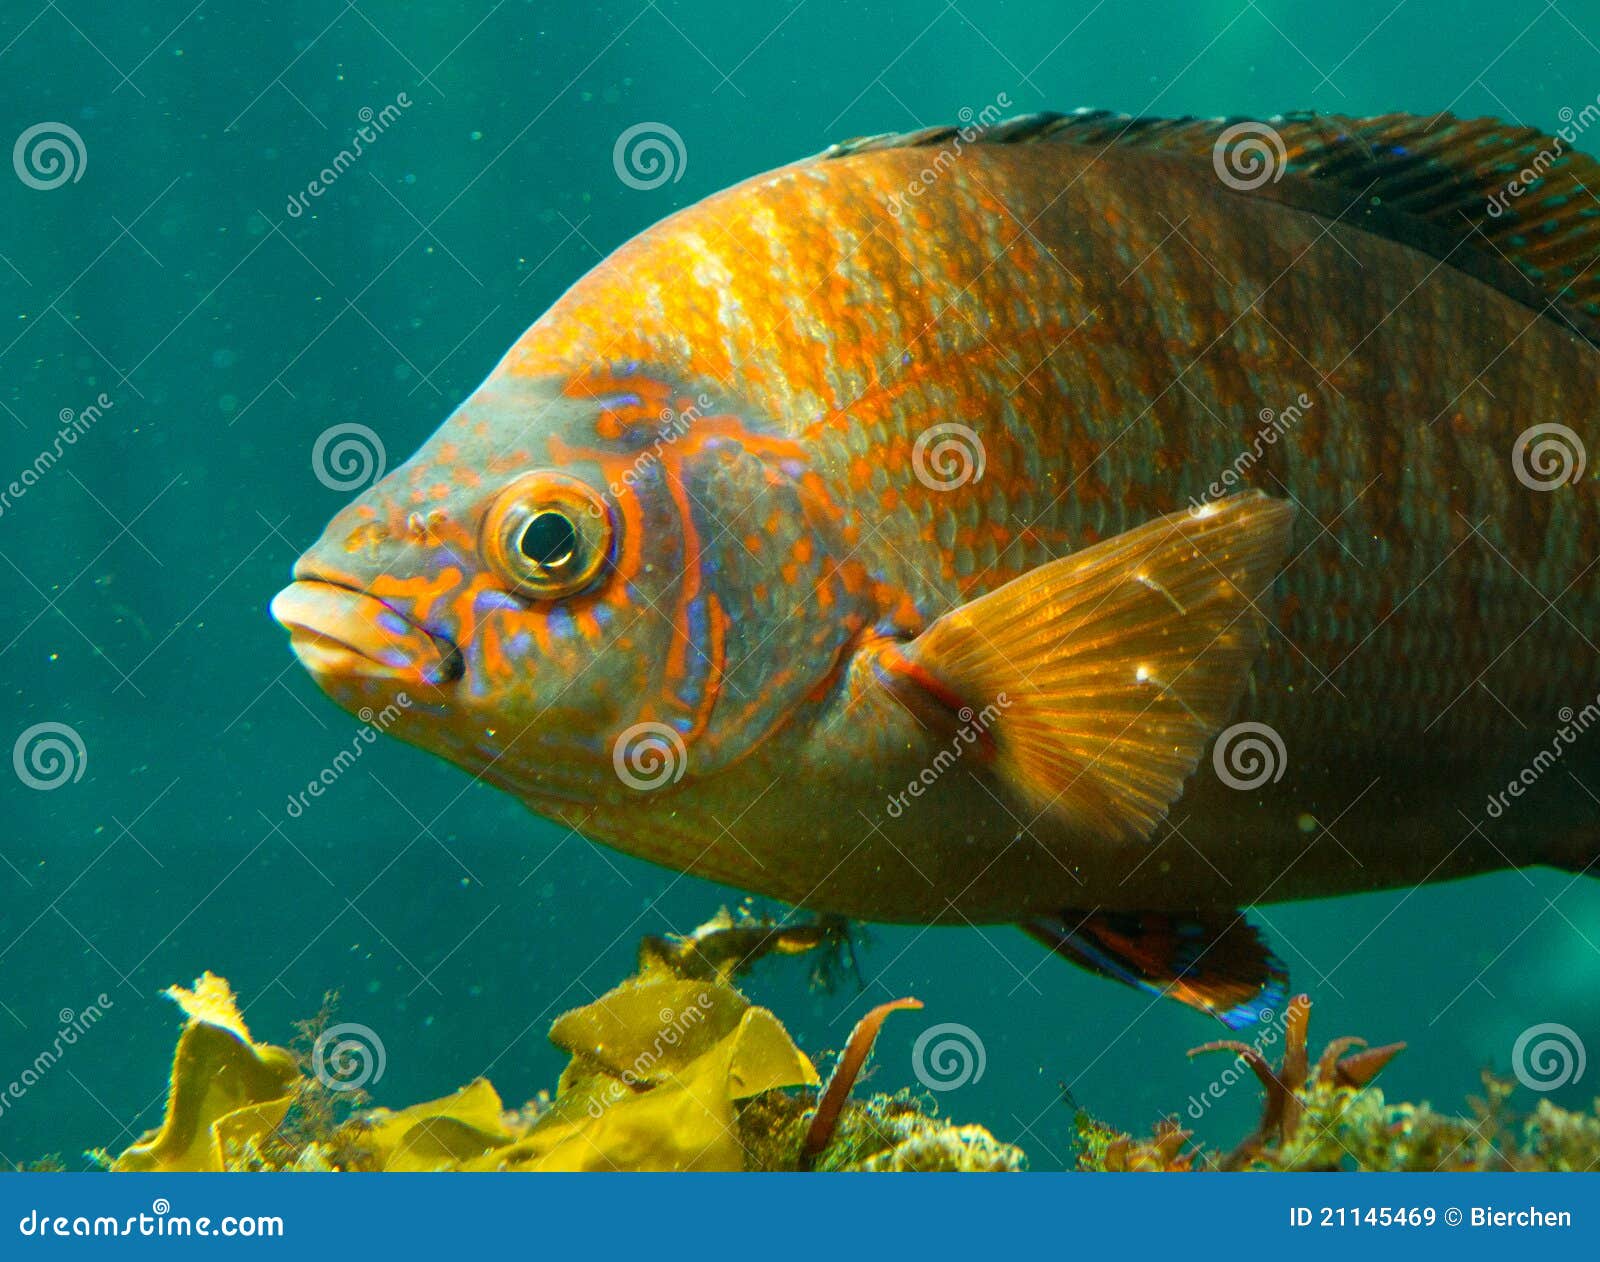 Colorful fish stock image. Image of animal, kelp, river - 21145469